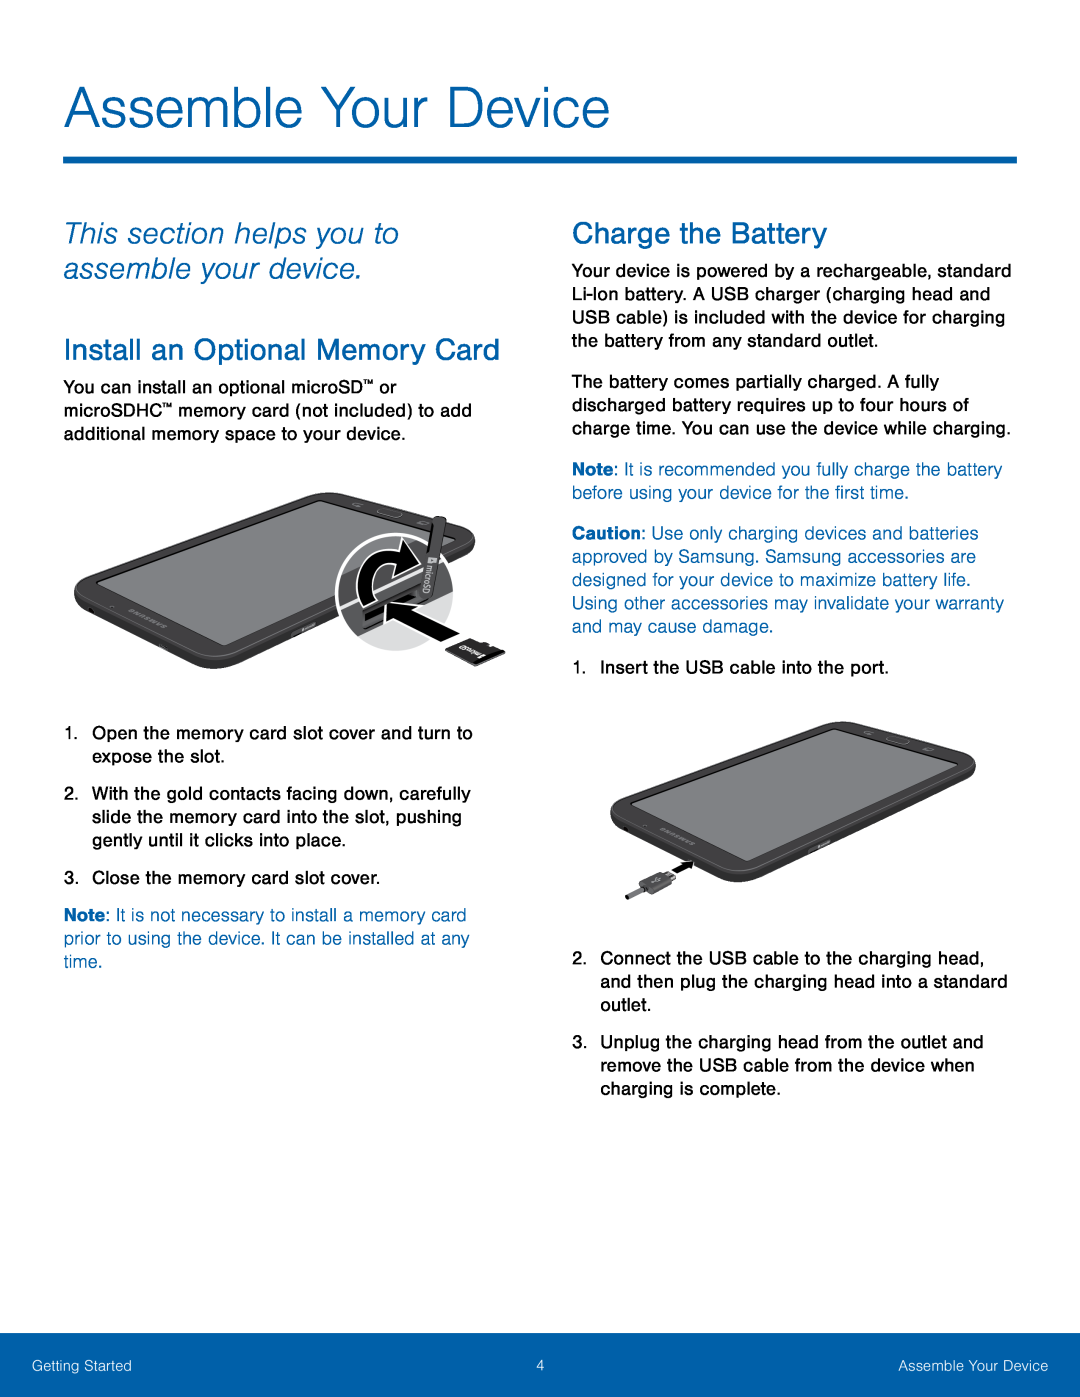 Install an Optional Memory Card Galaxy Tab A 7.0 Wi-Fi